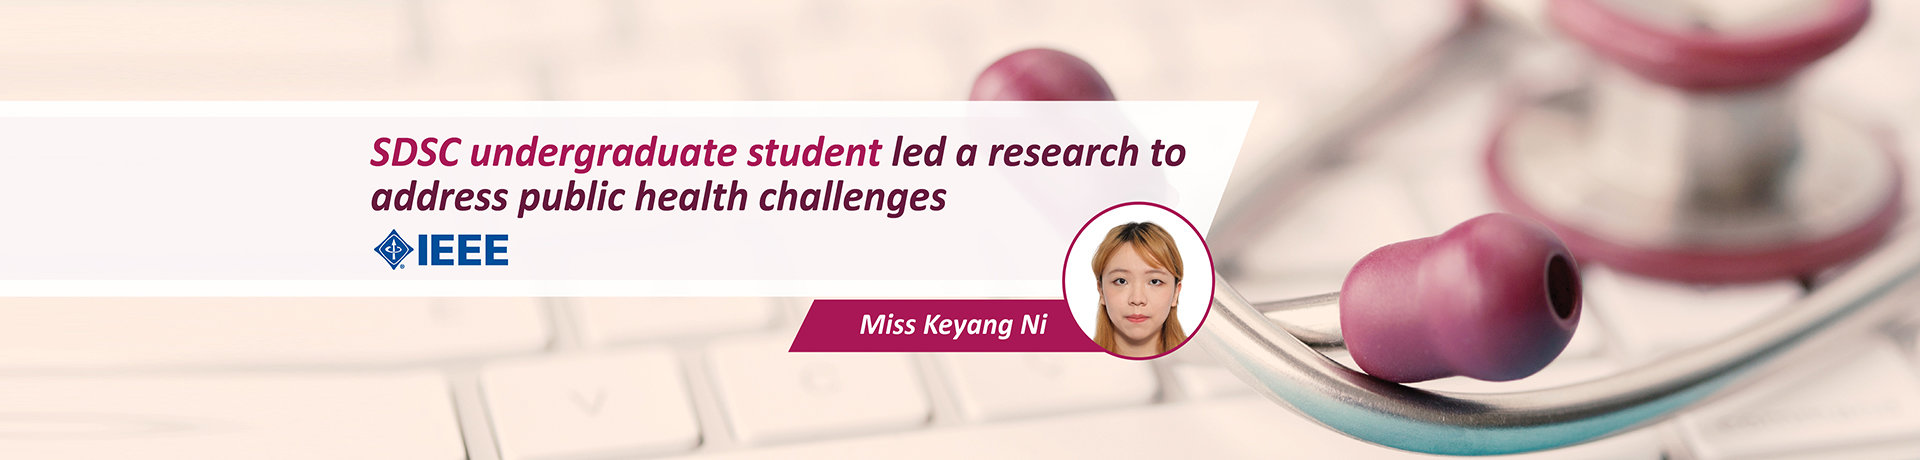 SDSC undergraduate student led a research to address public health challenges